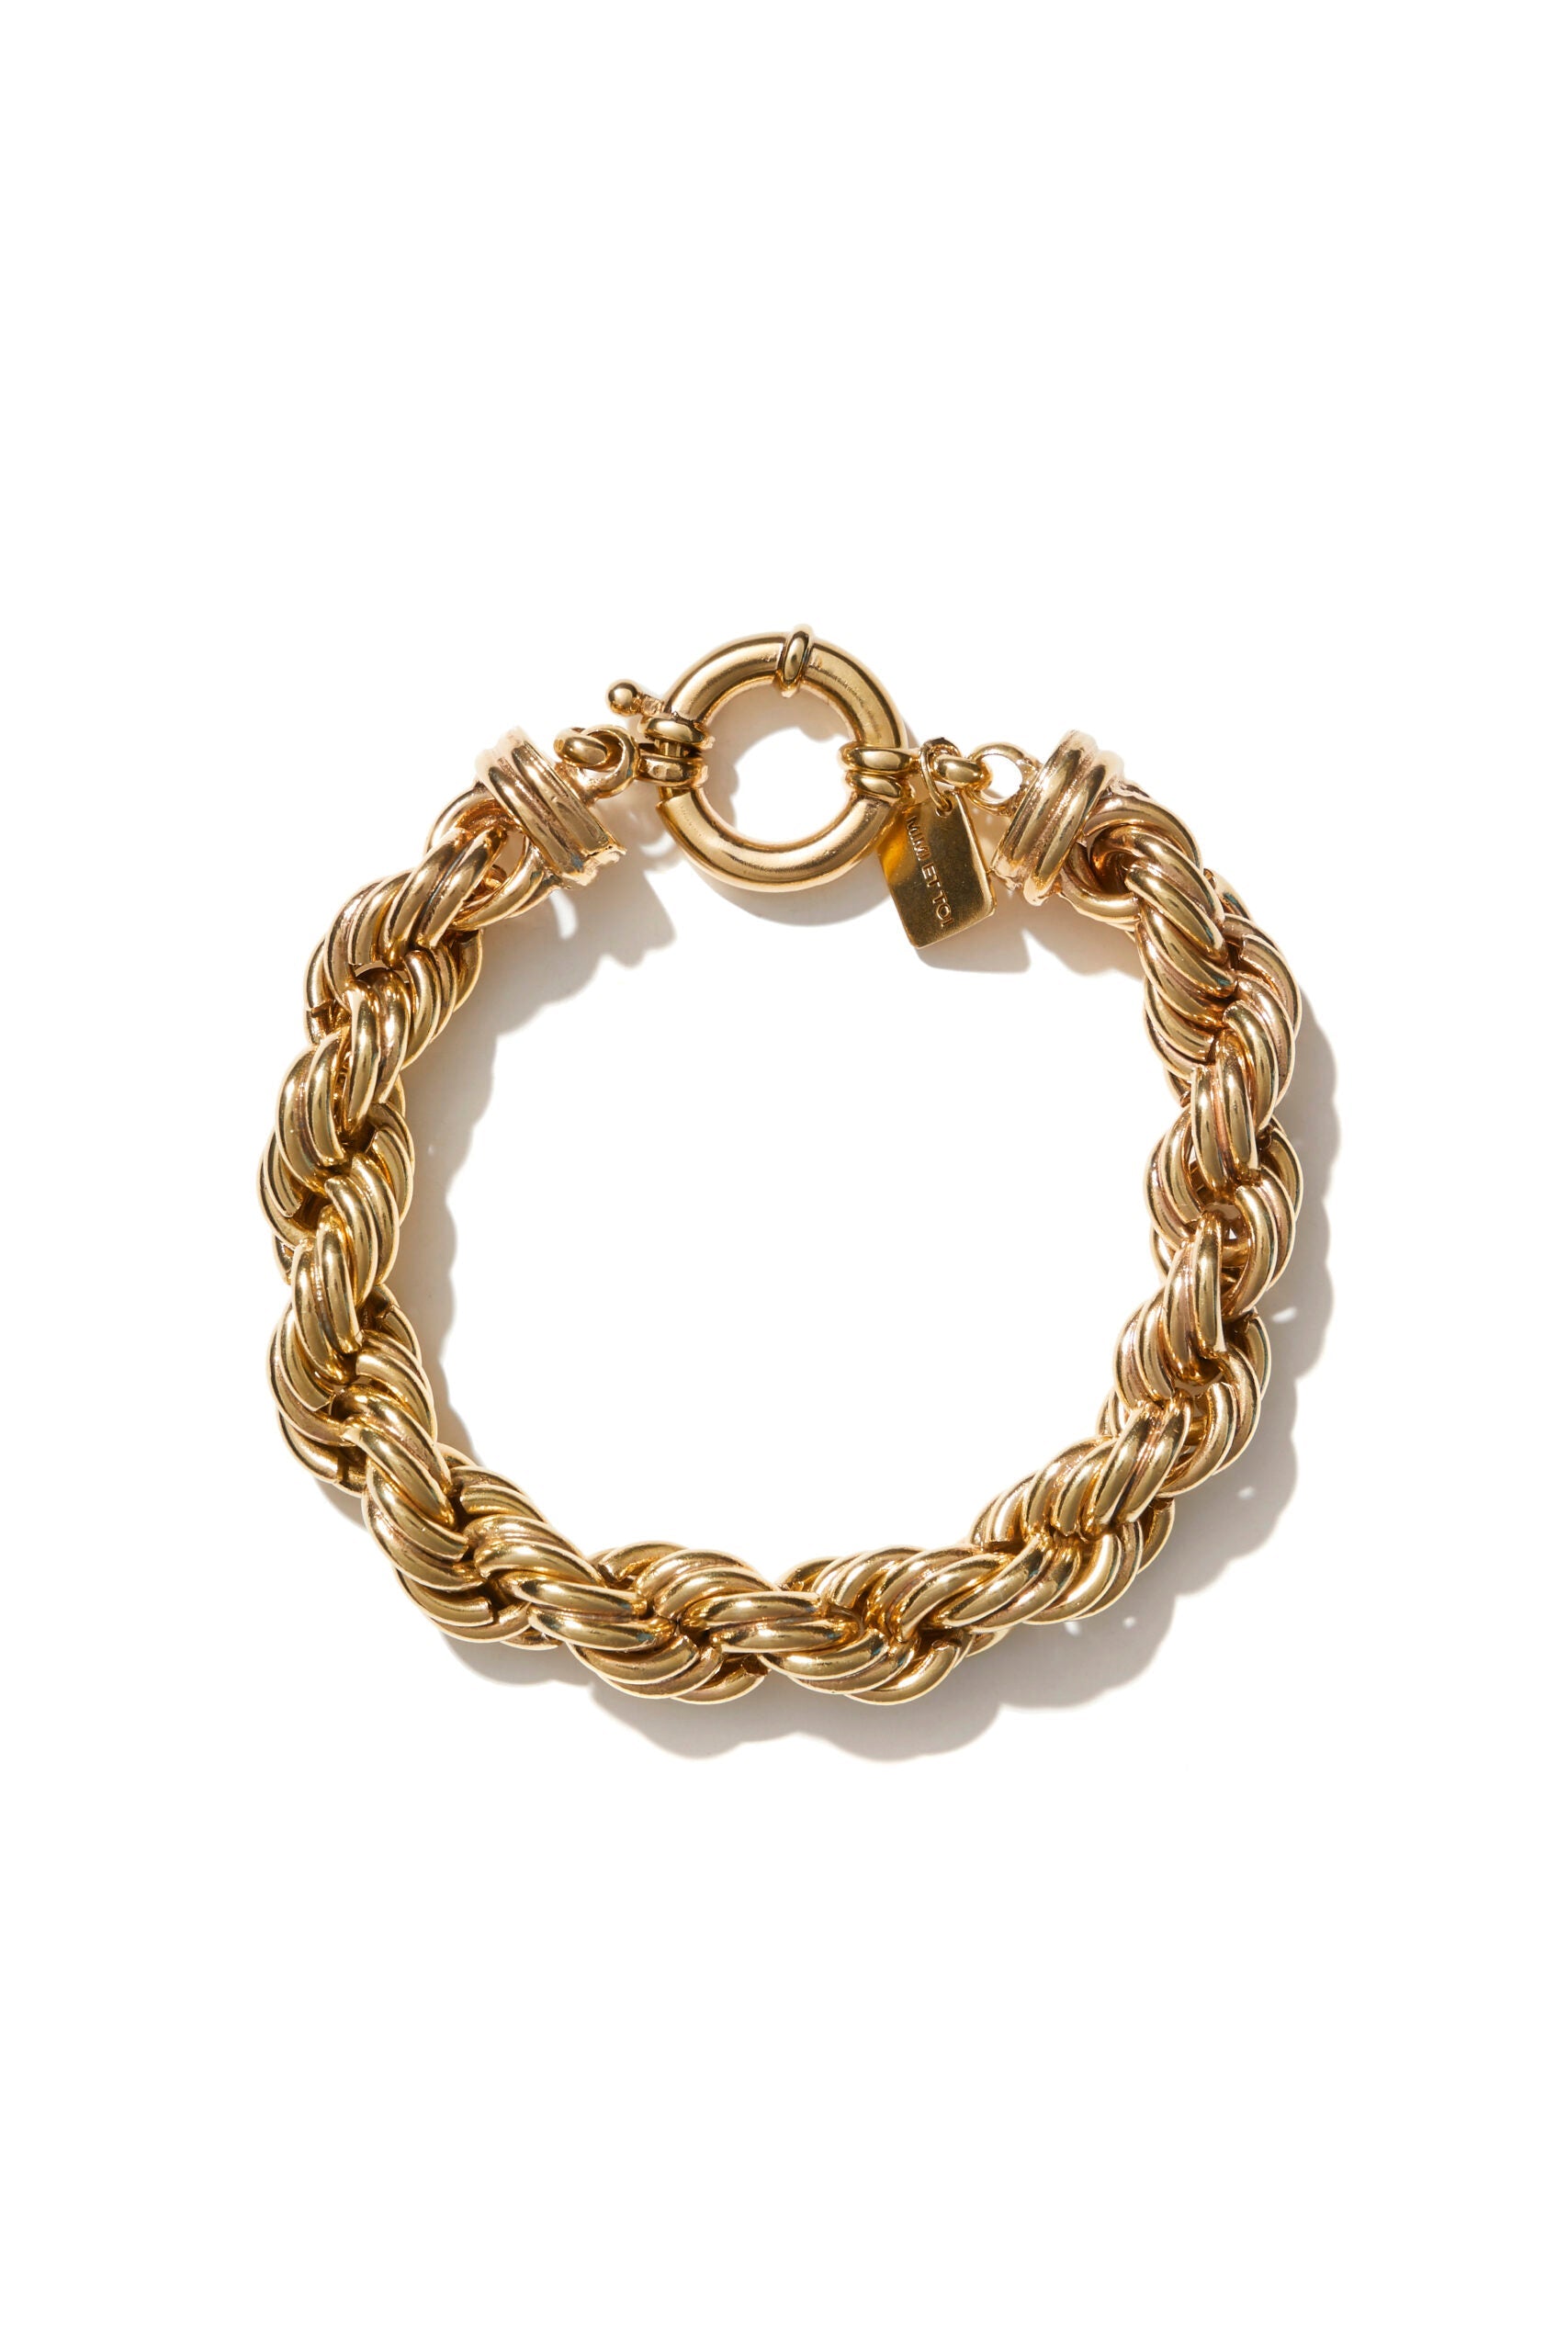 Collette Brass bracelet